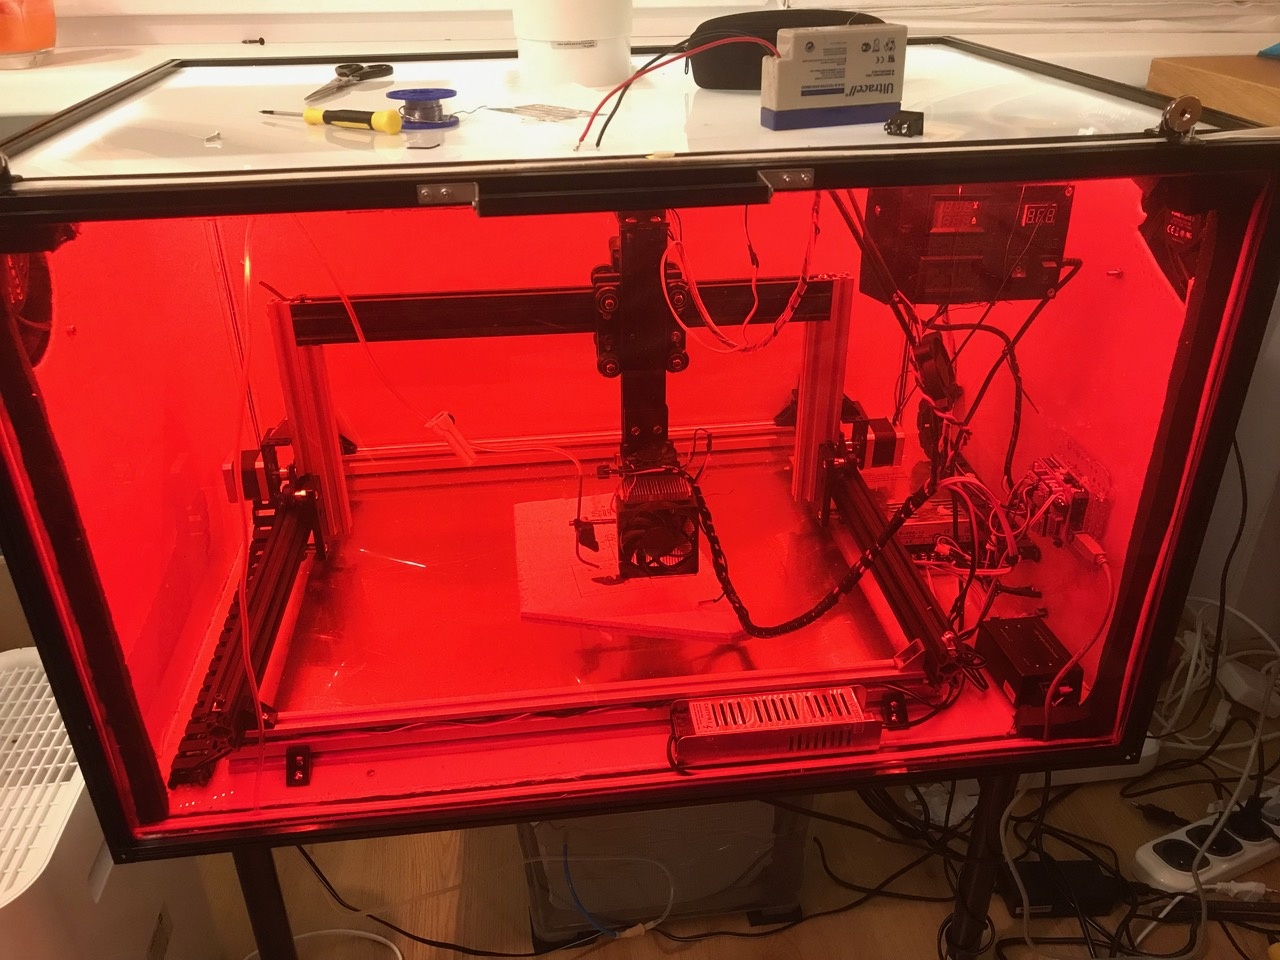 Laser cutter in MakerBeam enclosure - MakerBeam